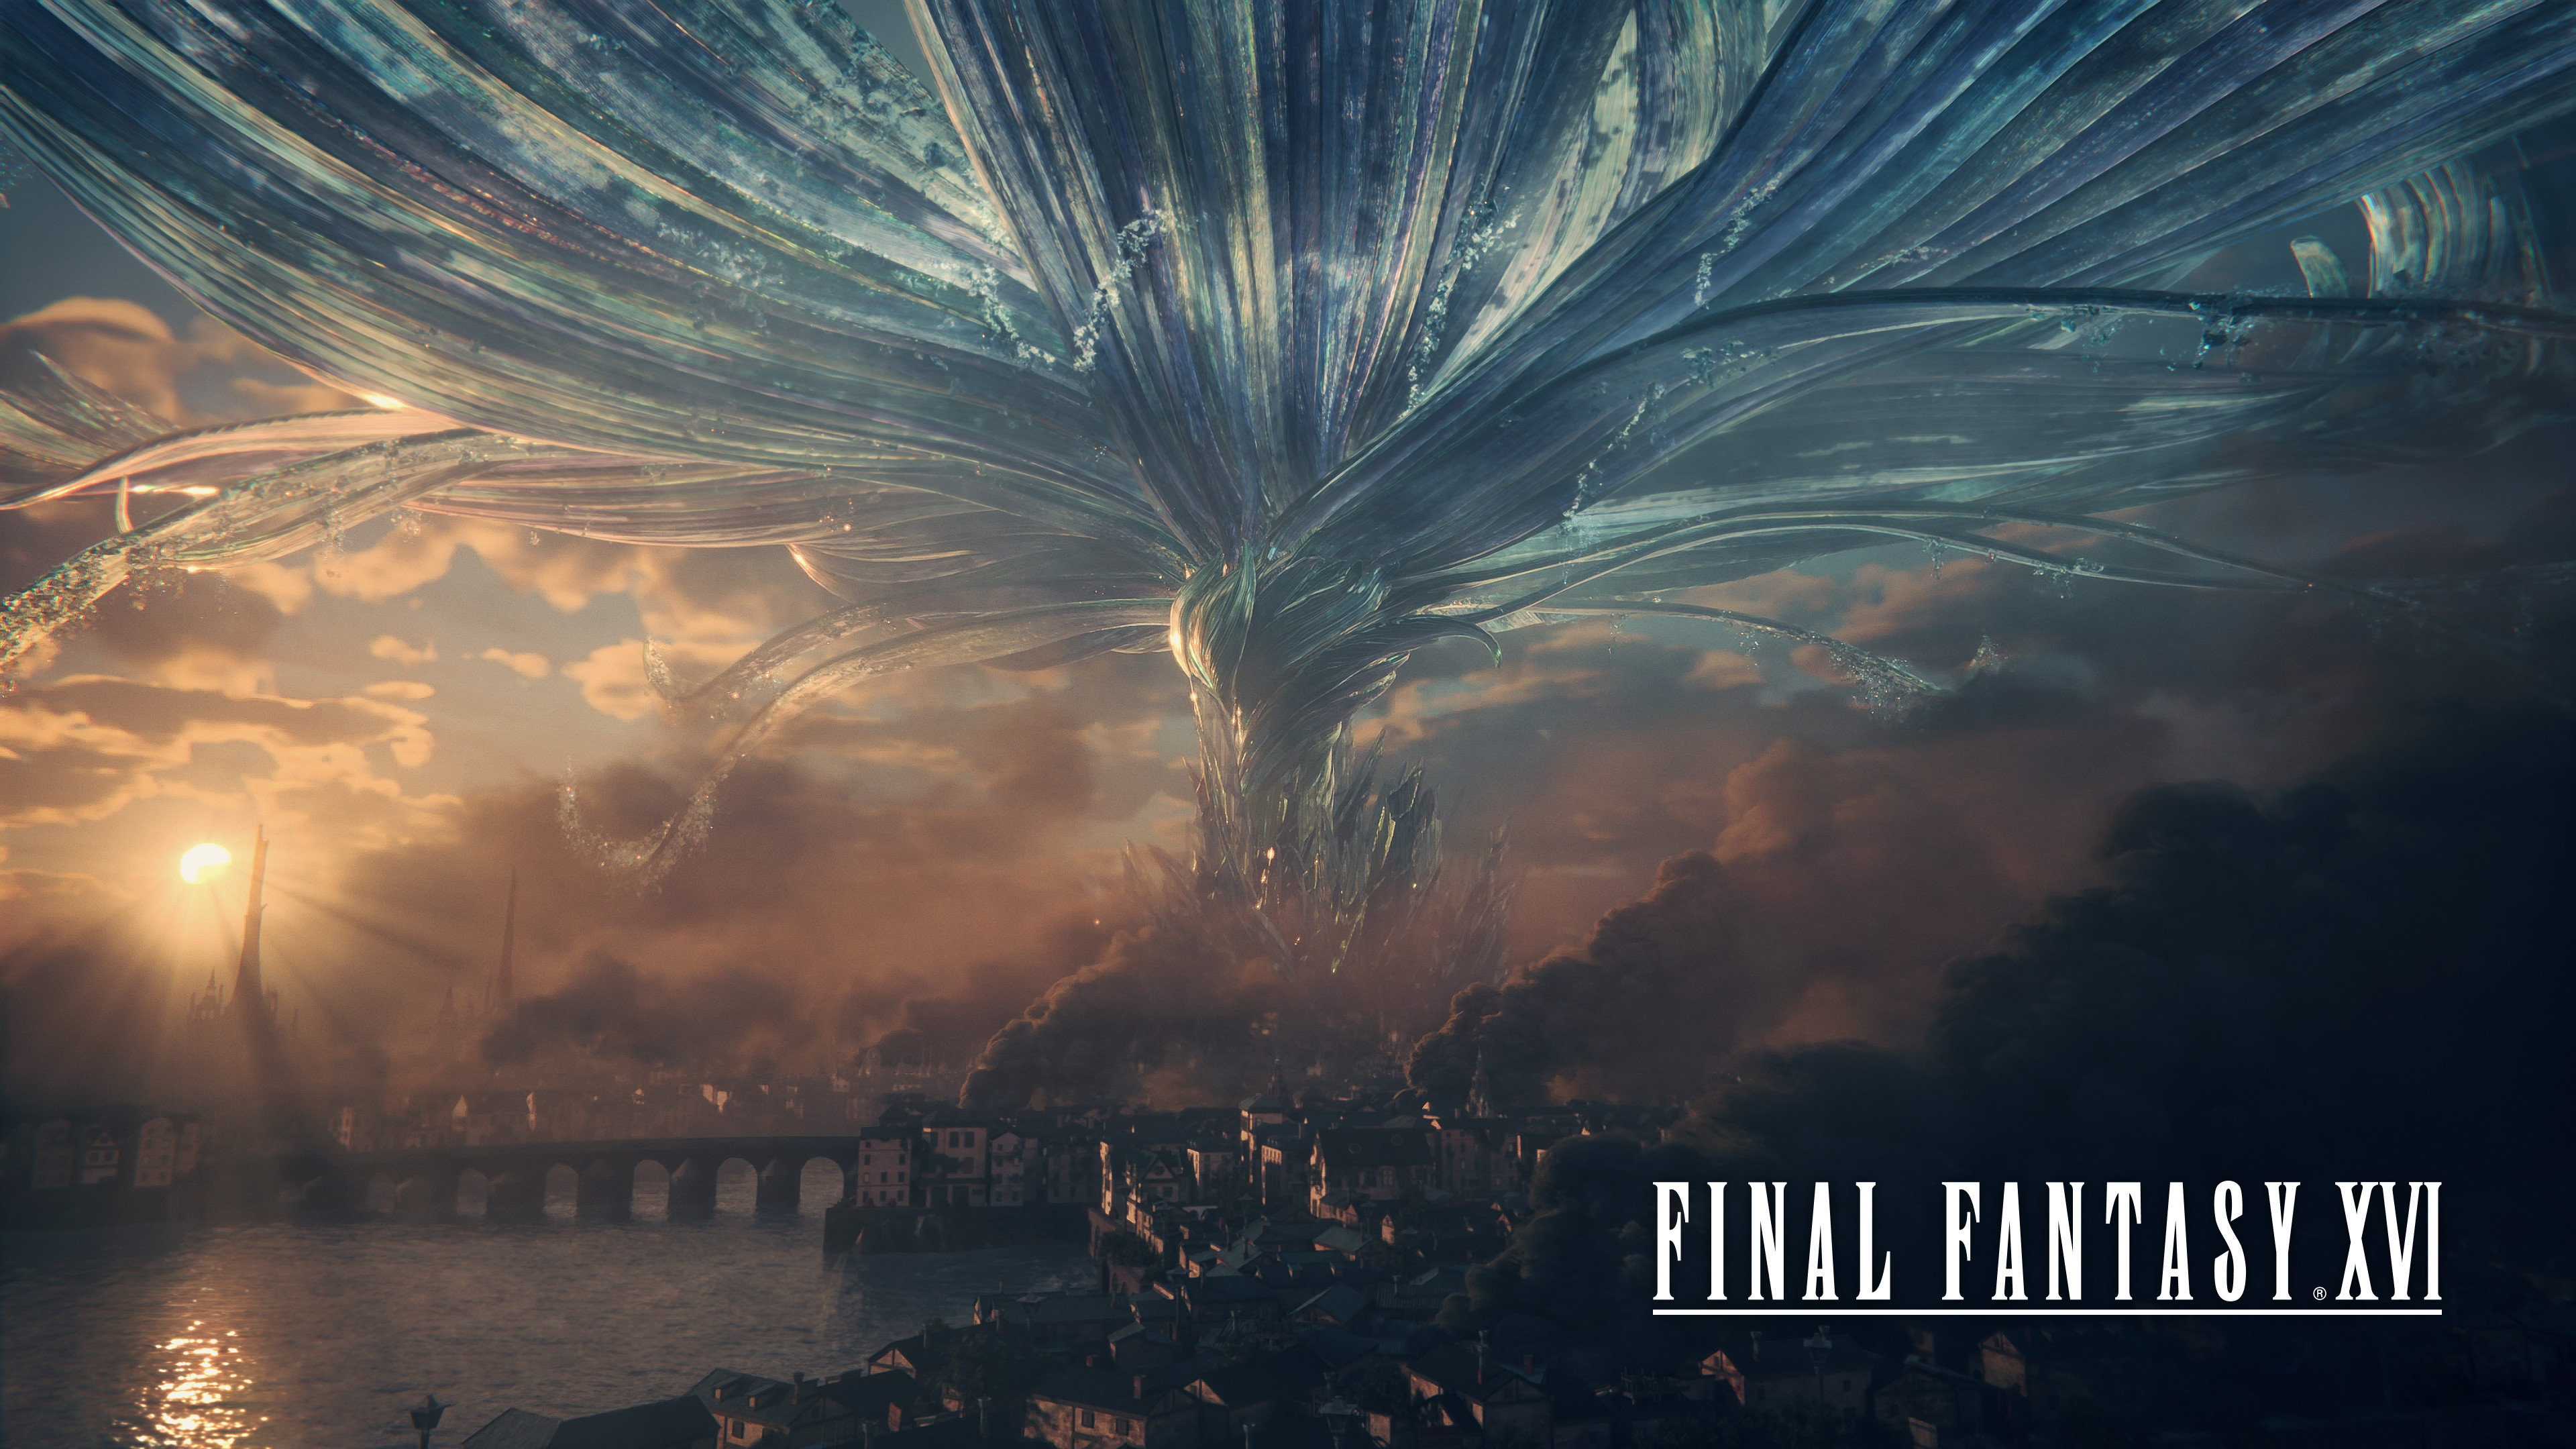 Shiva Anime FA  Final Fantasy XVI Awakening Video Game 4K wallpaper  download